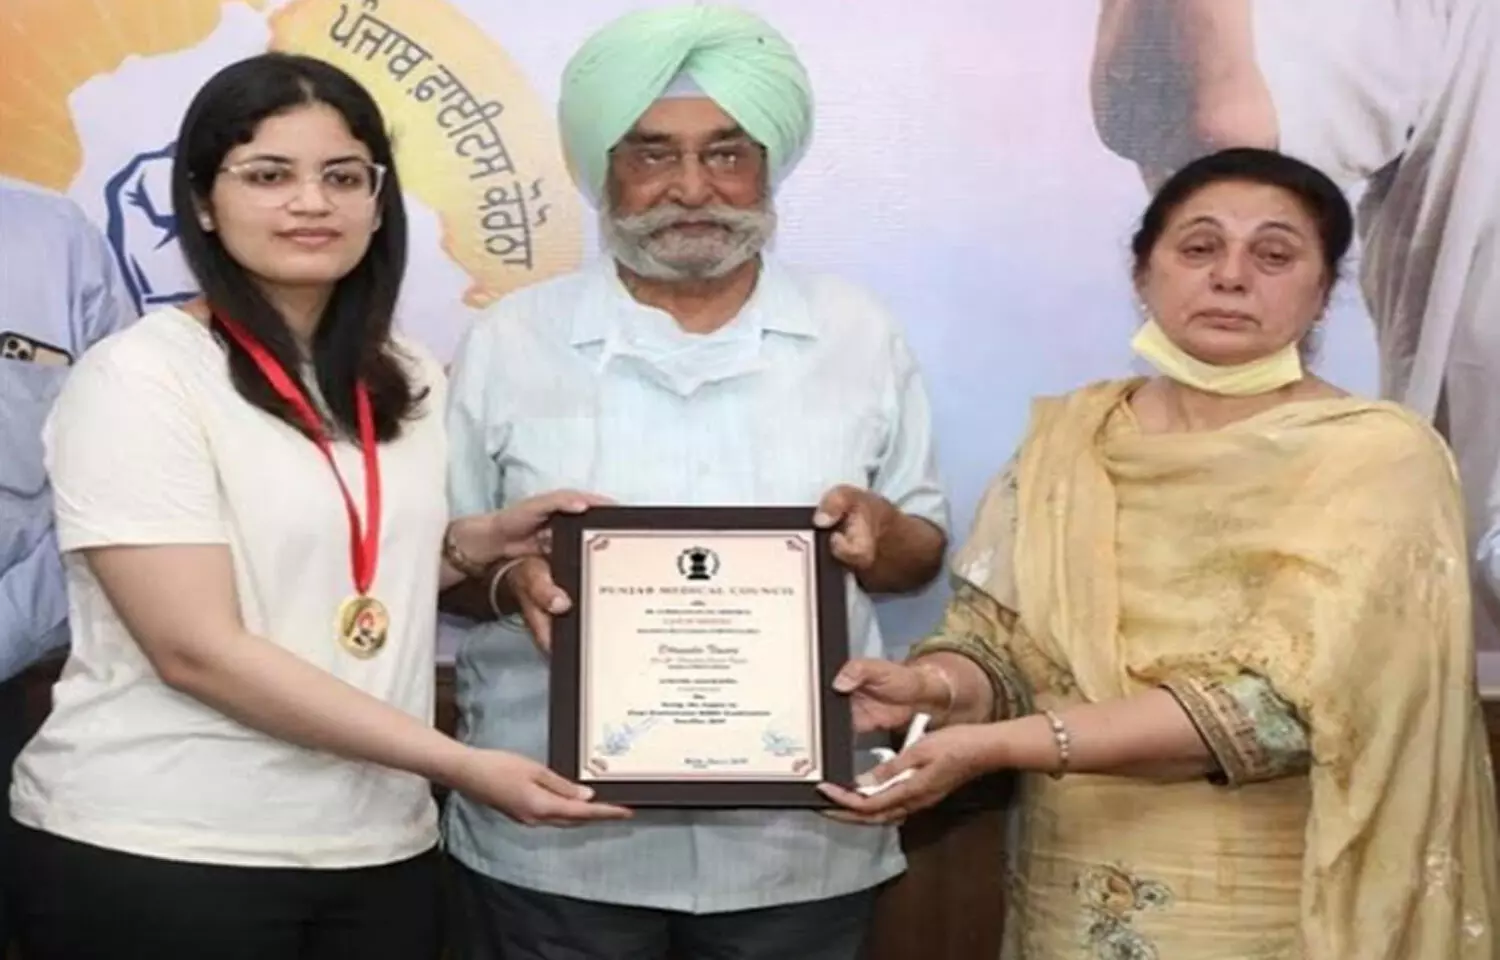 BFUHS: Punjab Medical Council felicitates MBBS topper with Gurmej Singh Gill Memorial Gold Medal